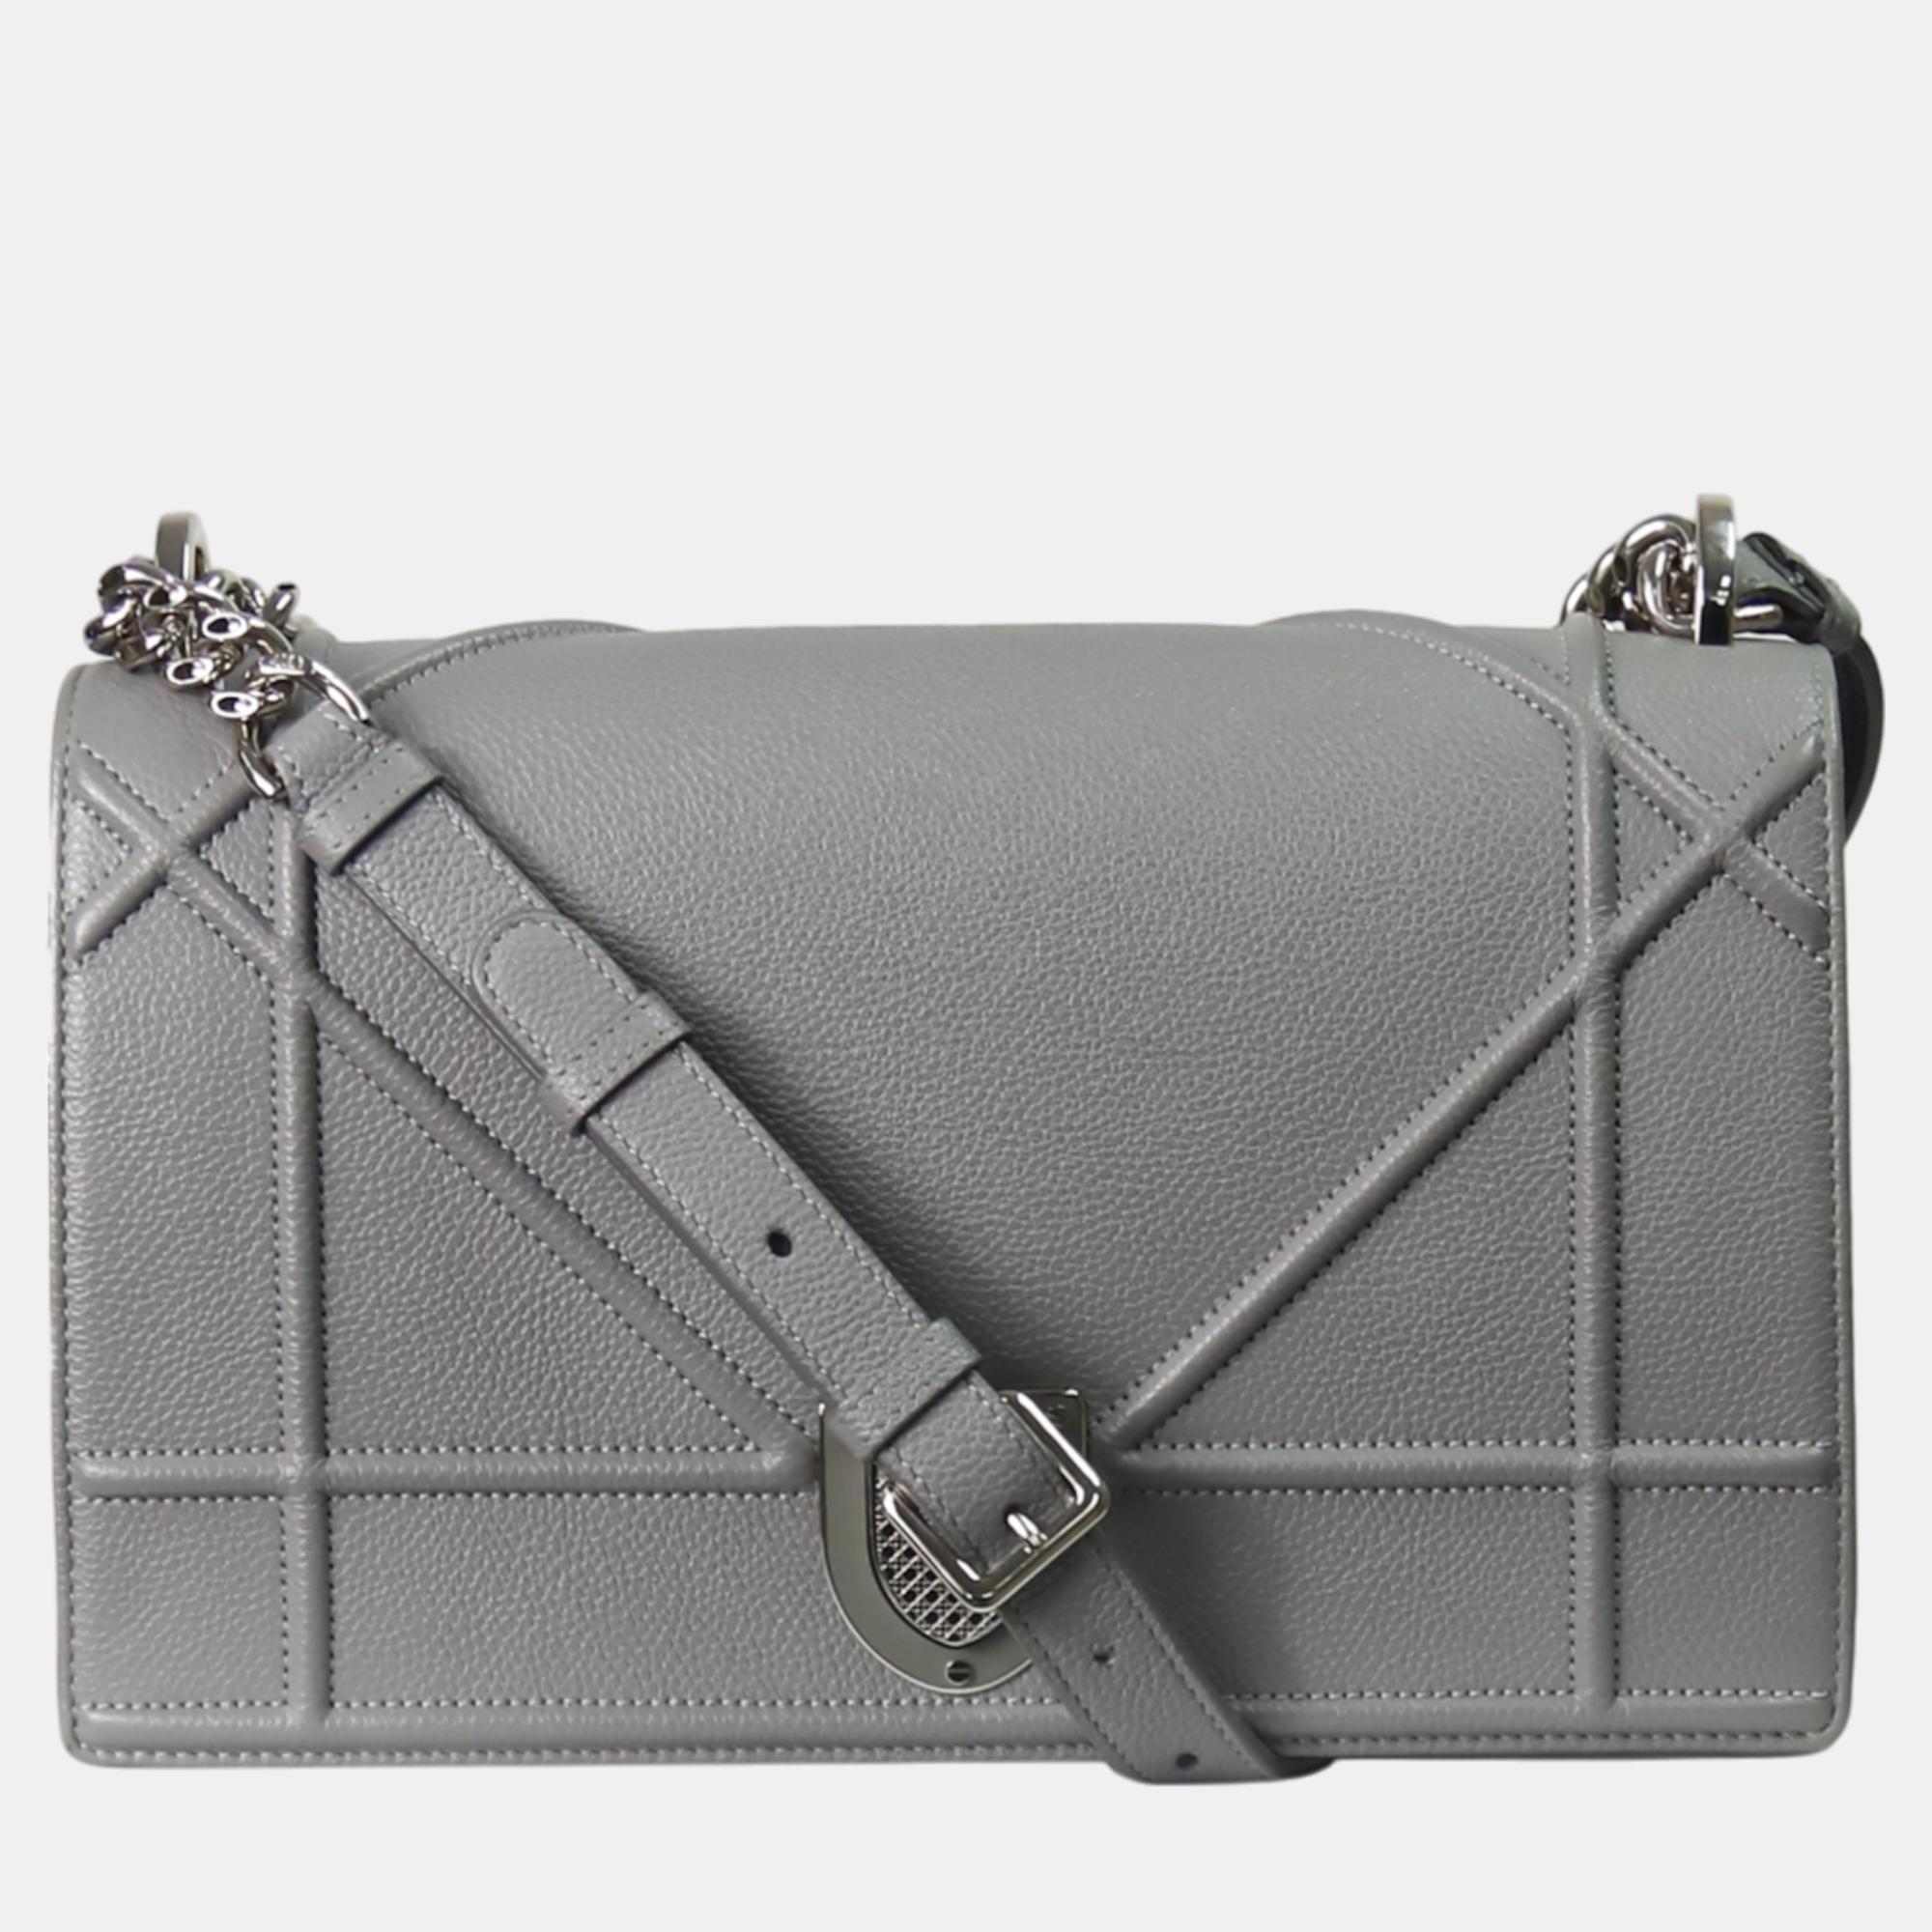 Dior grey leather medium diorama shoulder bag